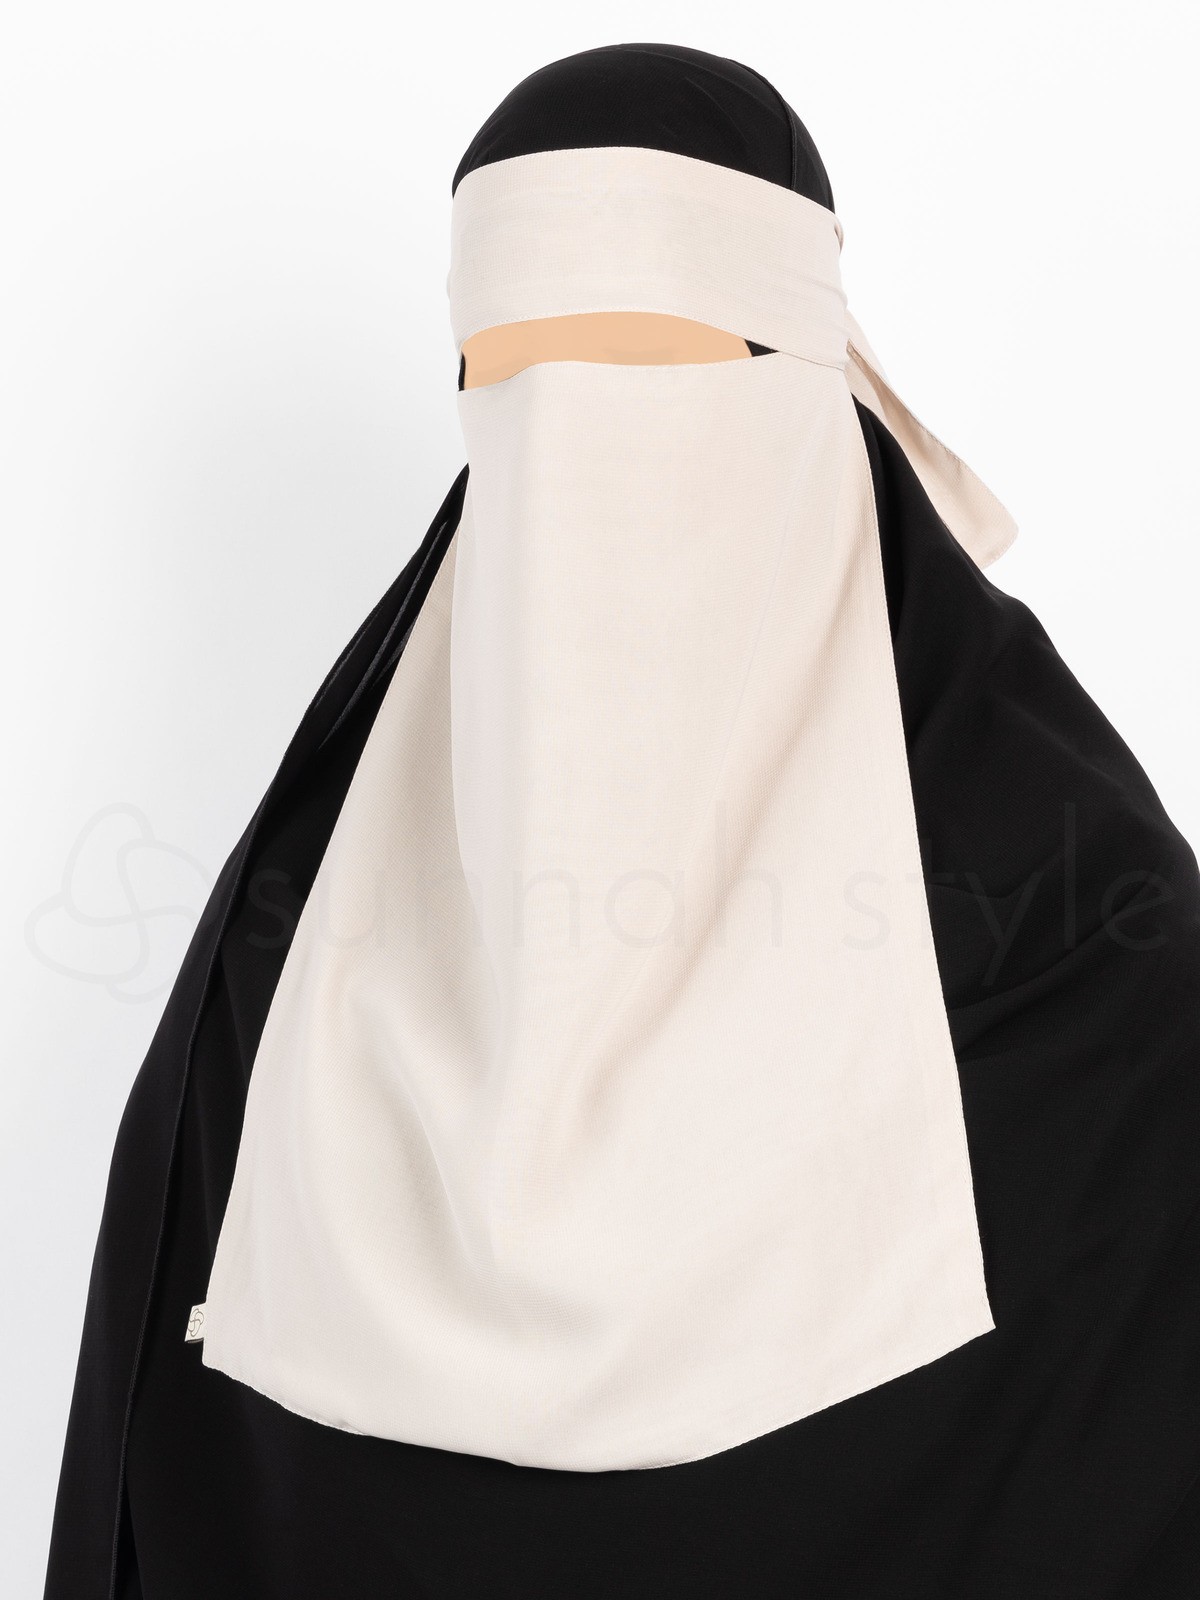 Sunnah Style - Pull-Down One Layer Niqab (Sahara)